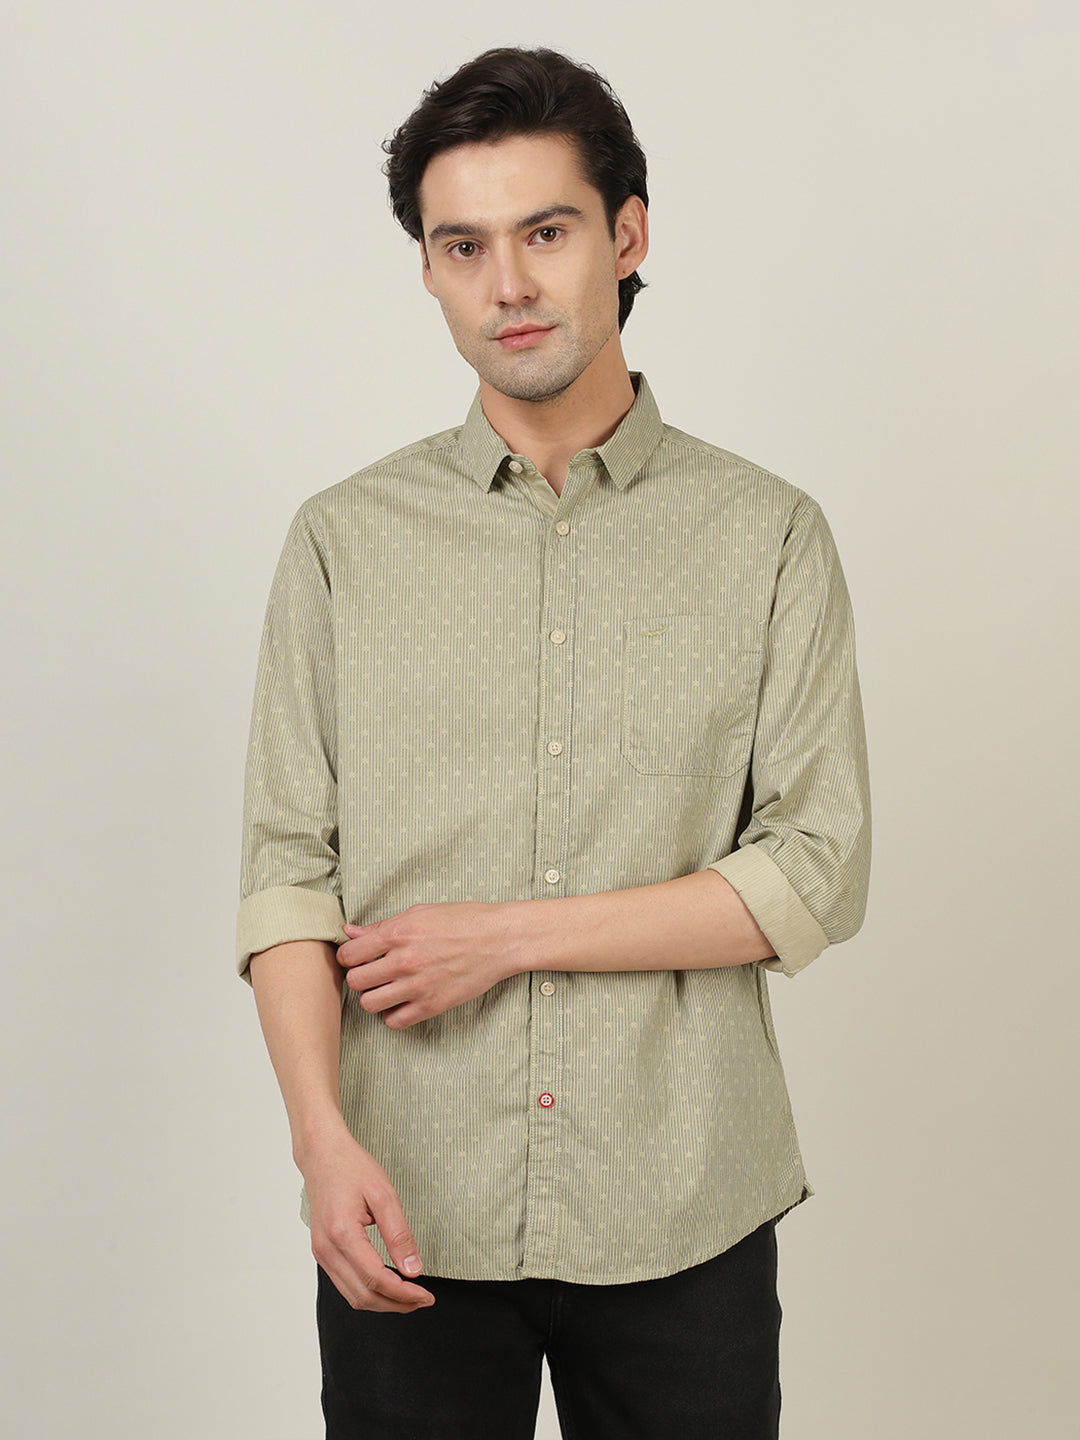 Crocodile Men's Pure Cotton Casual Shirt